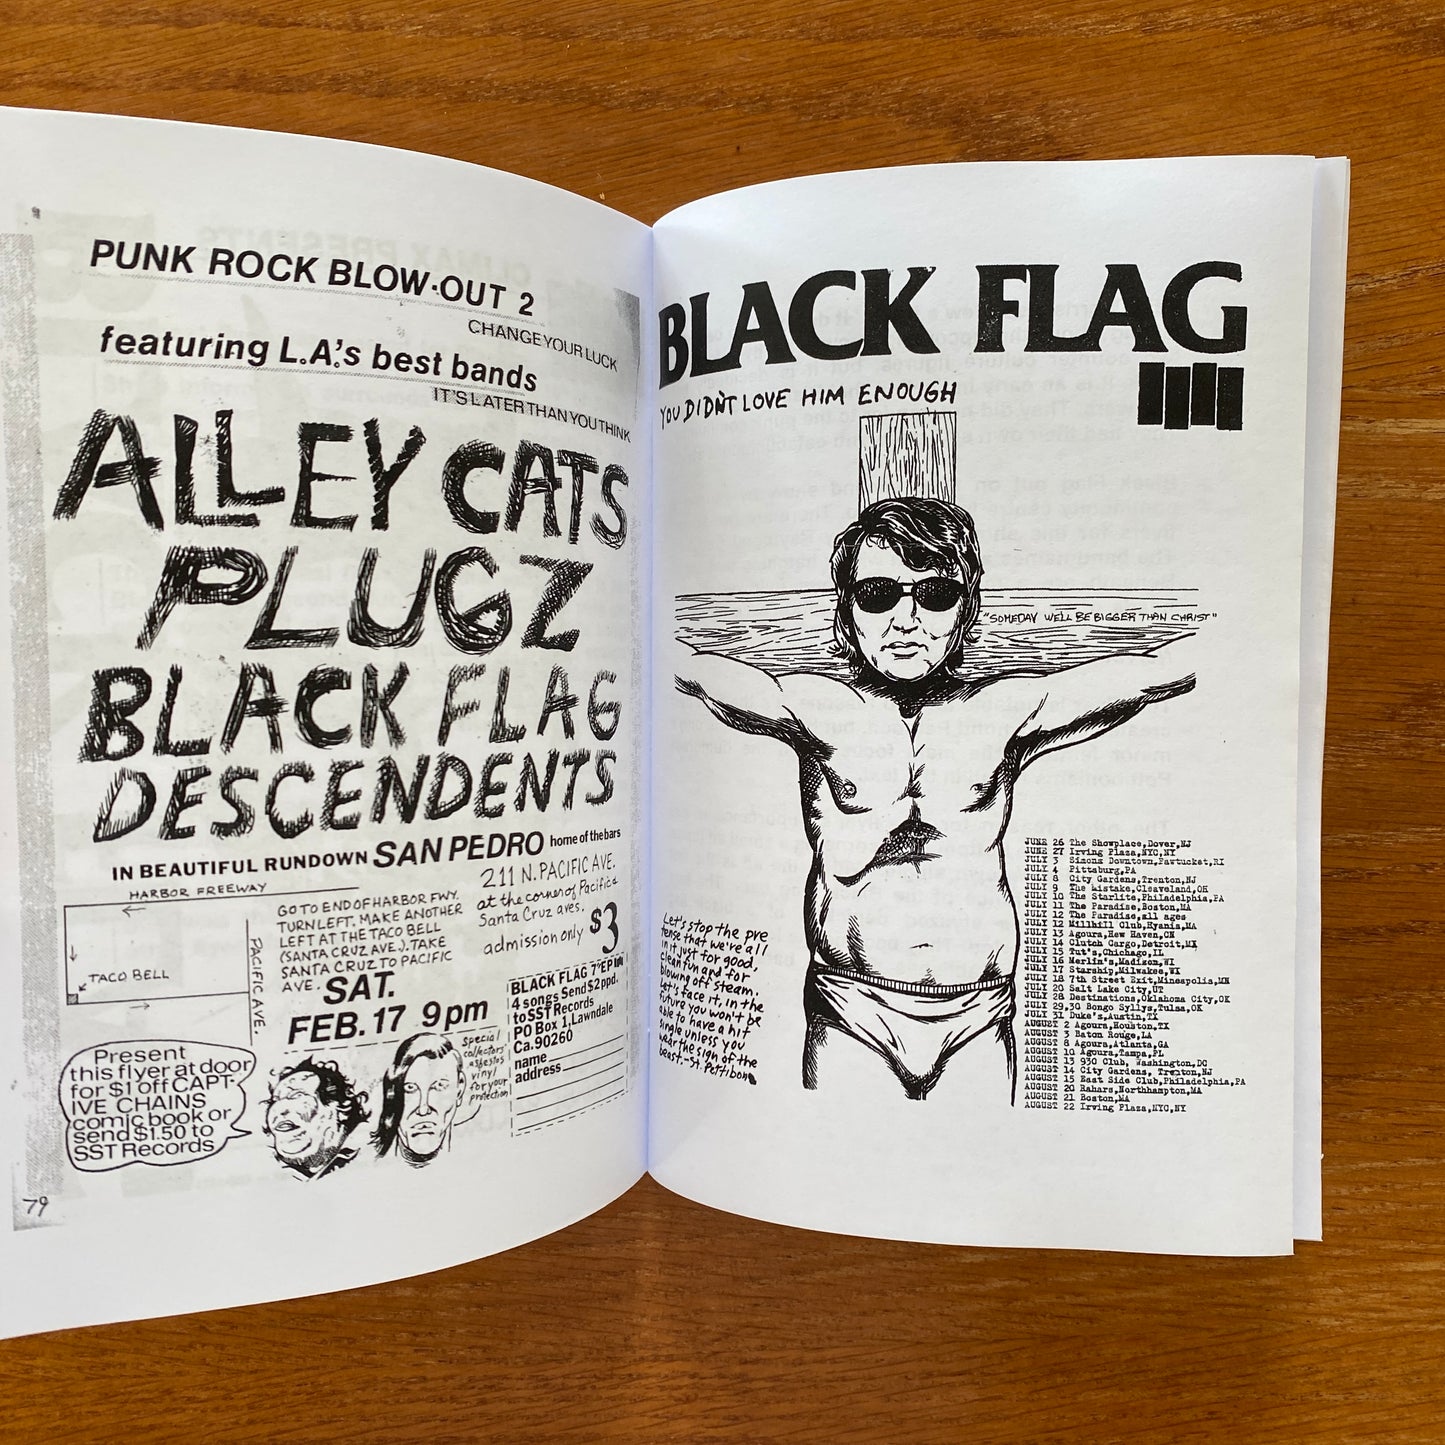 Art Through Intimidation - The Flyers Of Black Flag